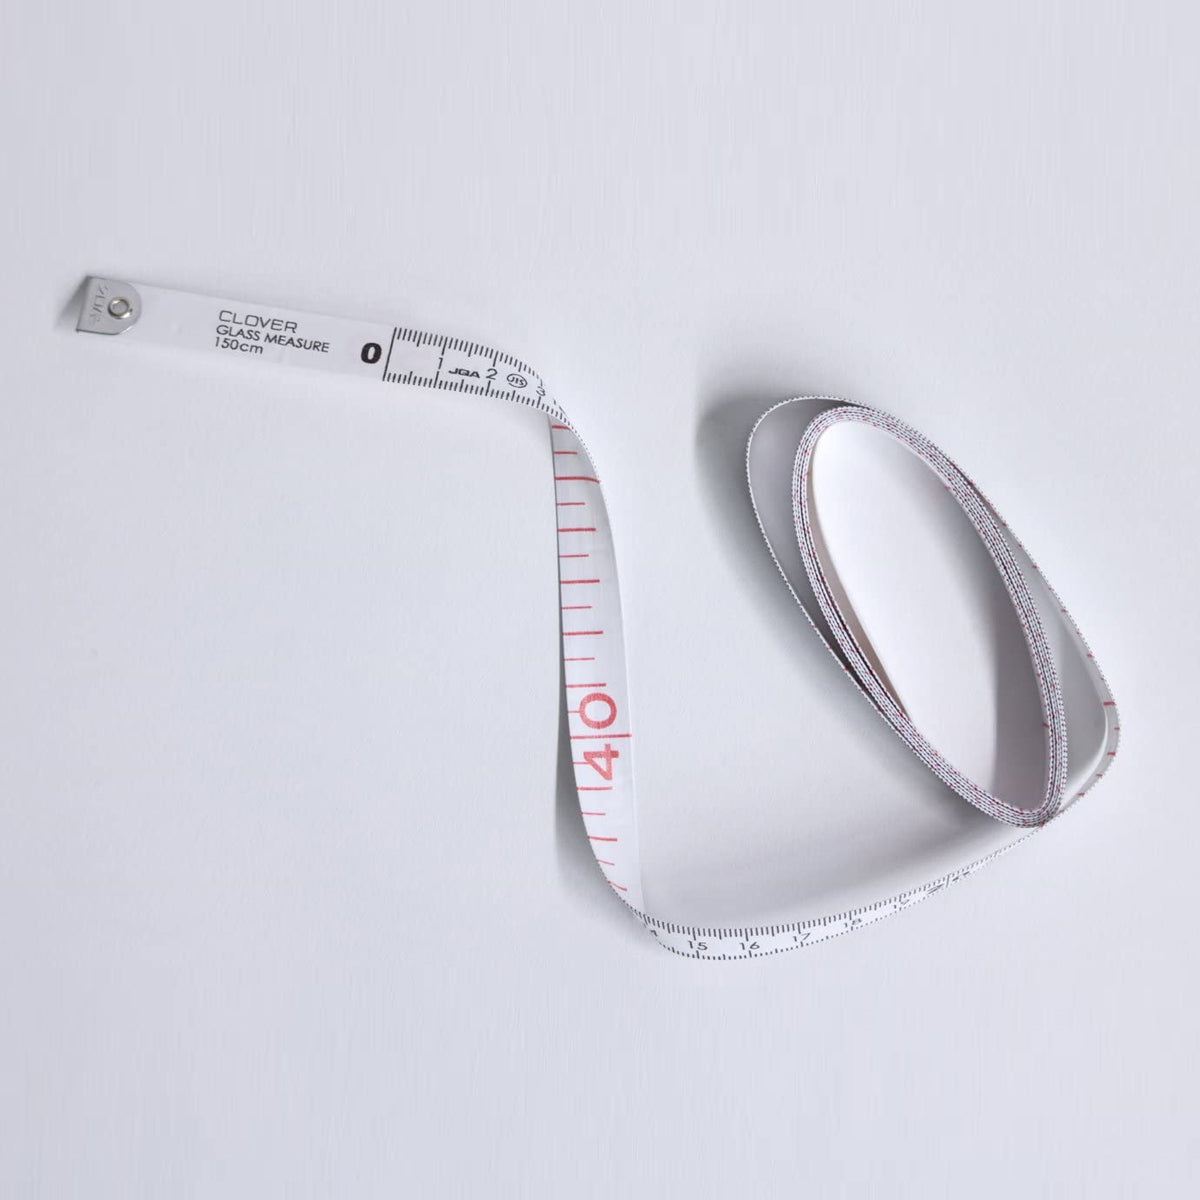 CLOVER - Soft Tailor Tape Measure 150cm 軟尺 - forestfabric 布恩堂